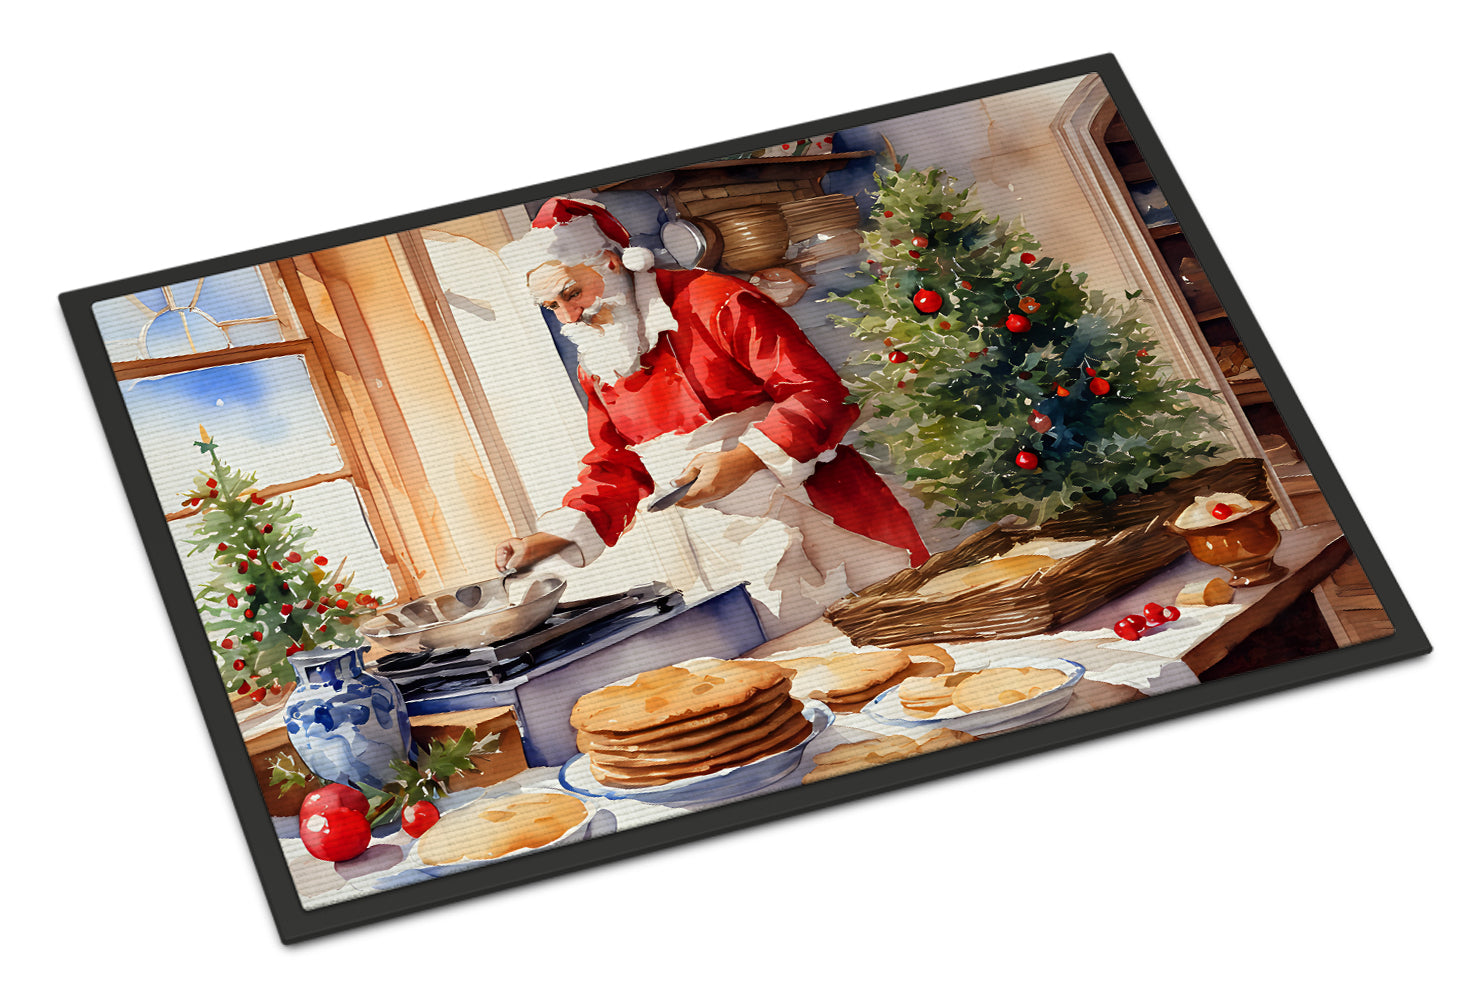 Buy this Cookies with Santa Claus Babbo Natale Doormat